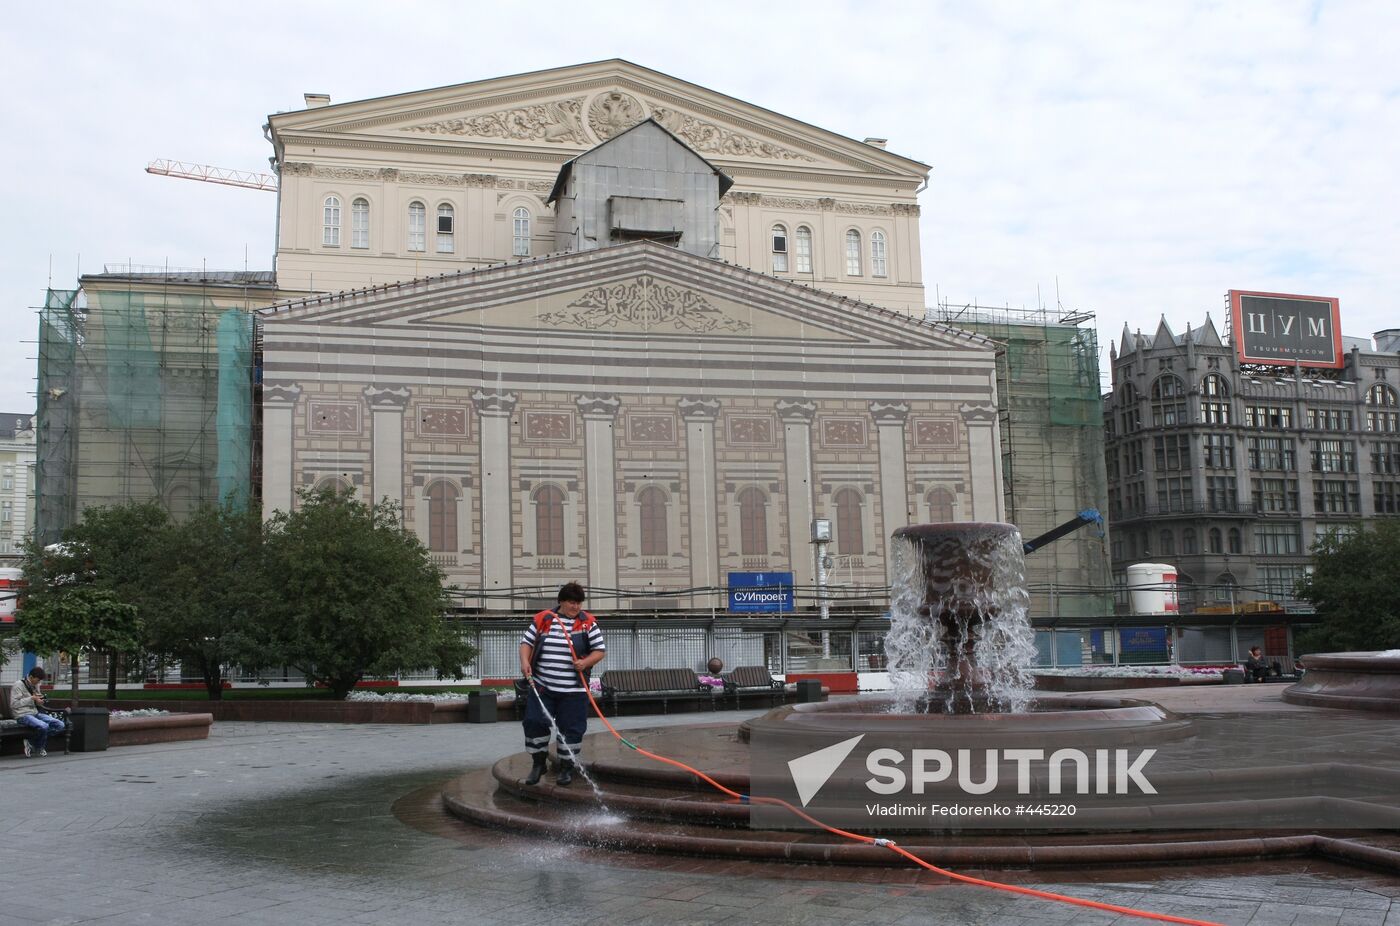 Bolshoi Theater premises